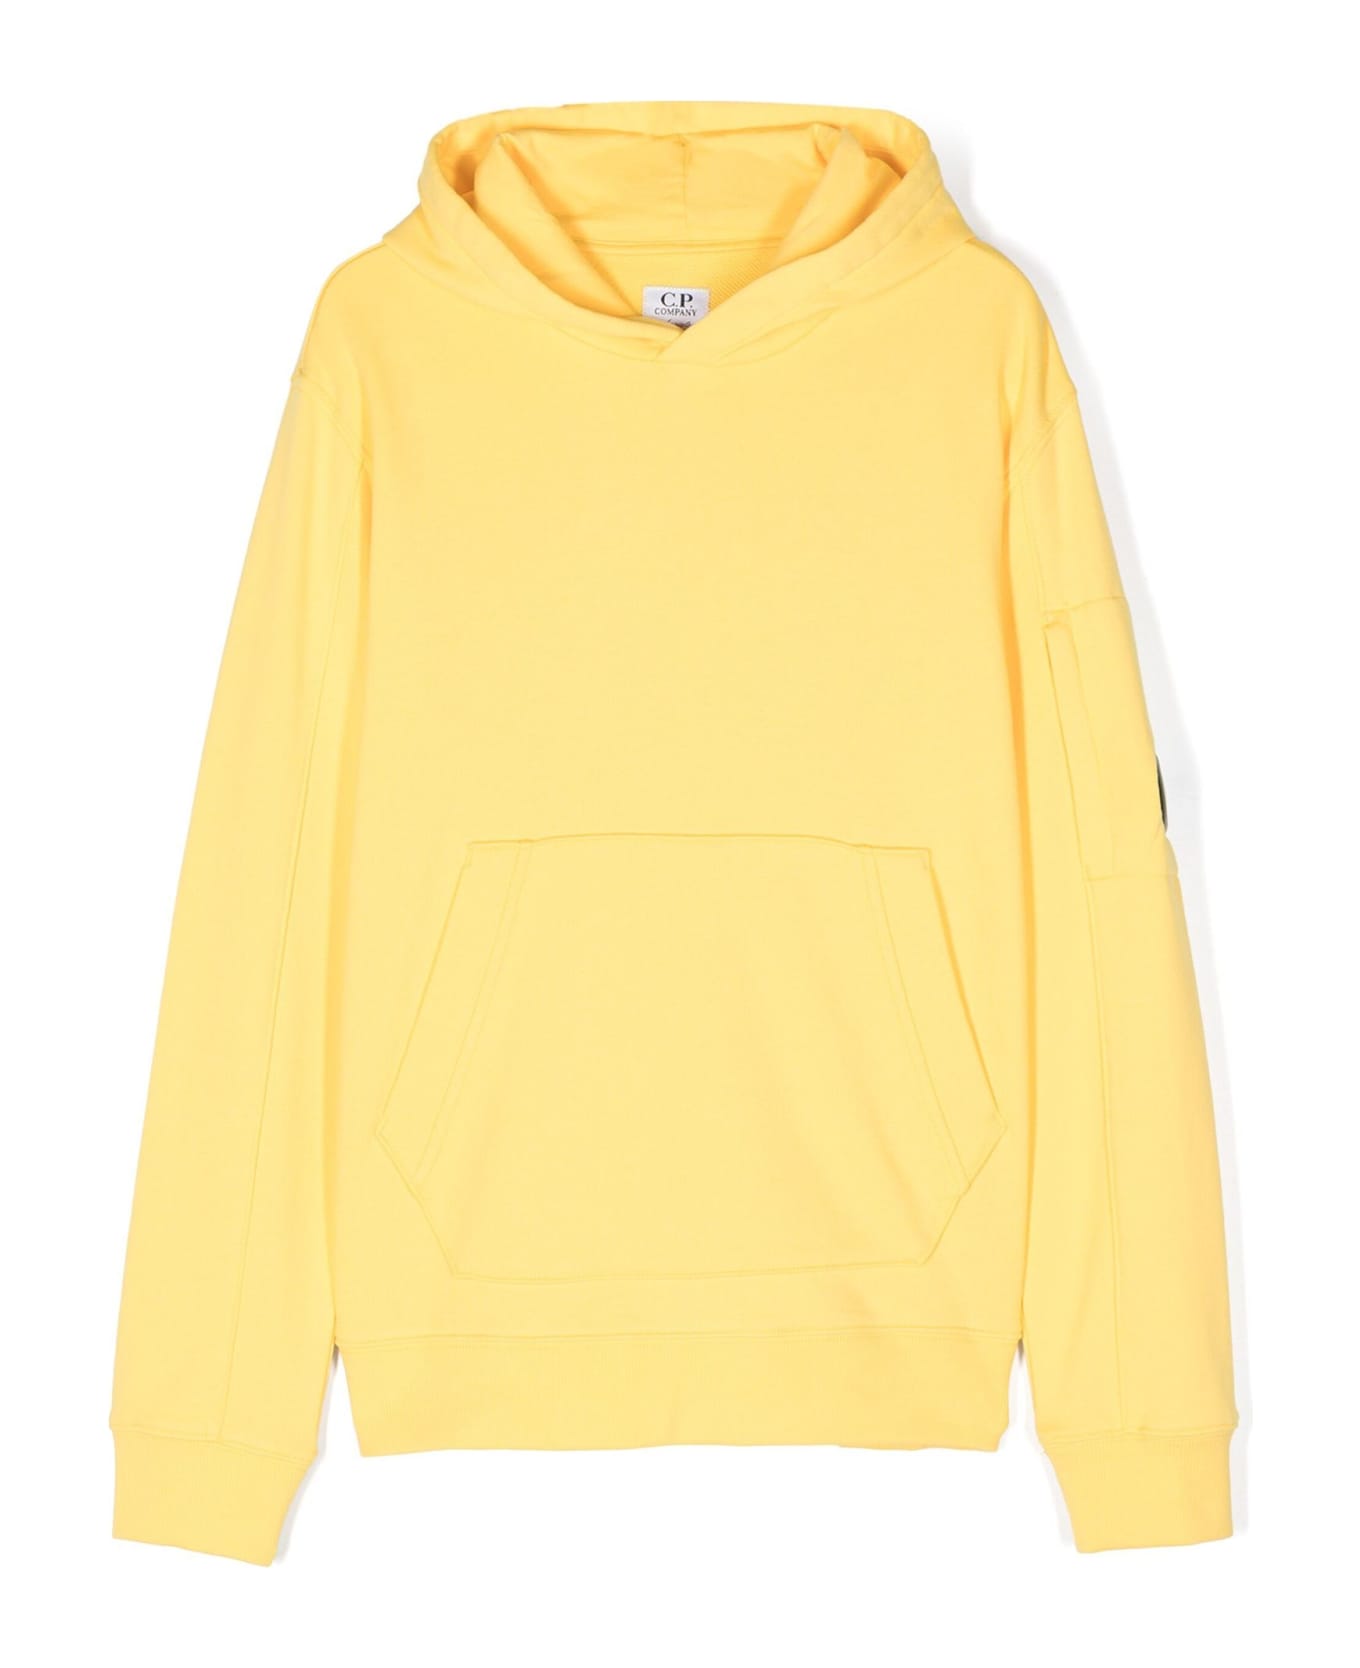 C.P. Company Sweaters Yellow - Yellow